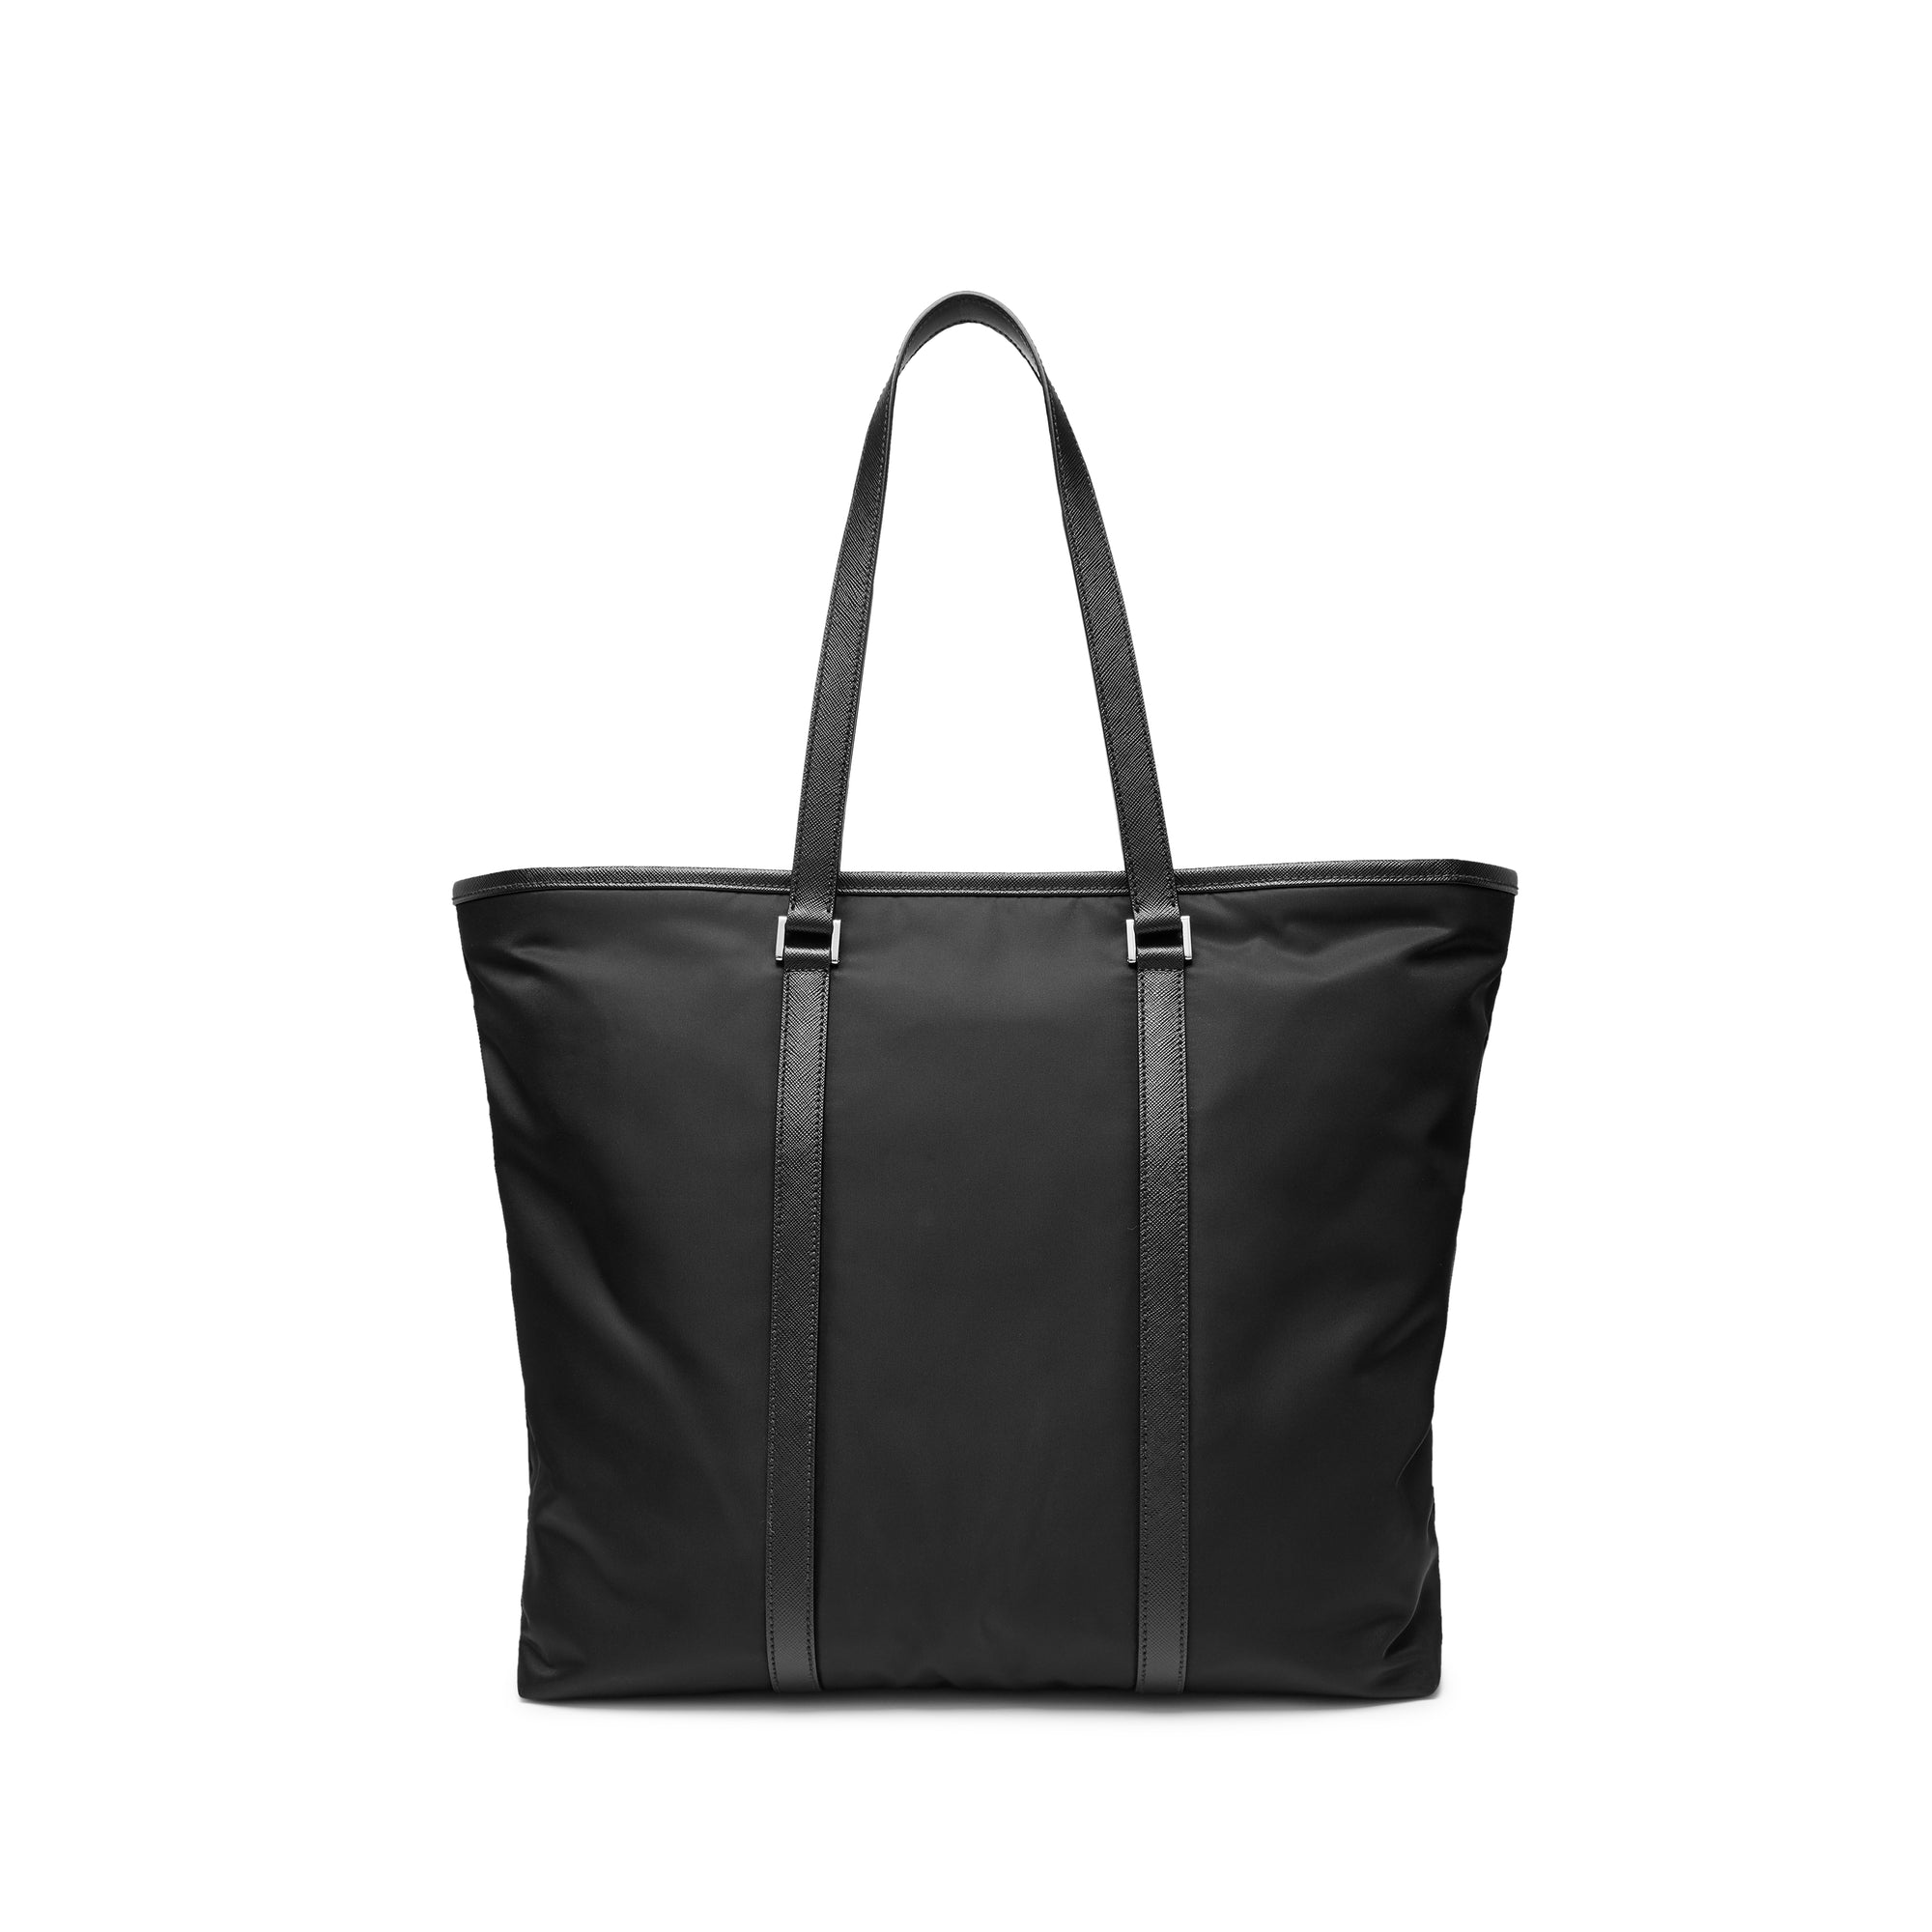 Prada - Men’s Shopping Bag - (Black) view 2